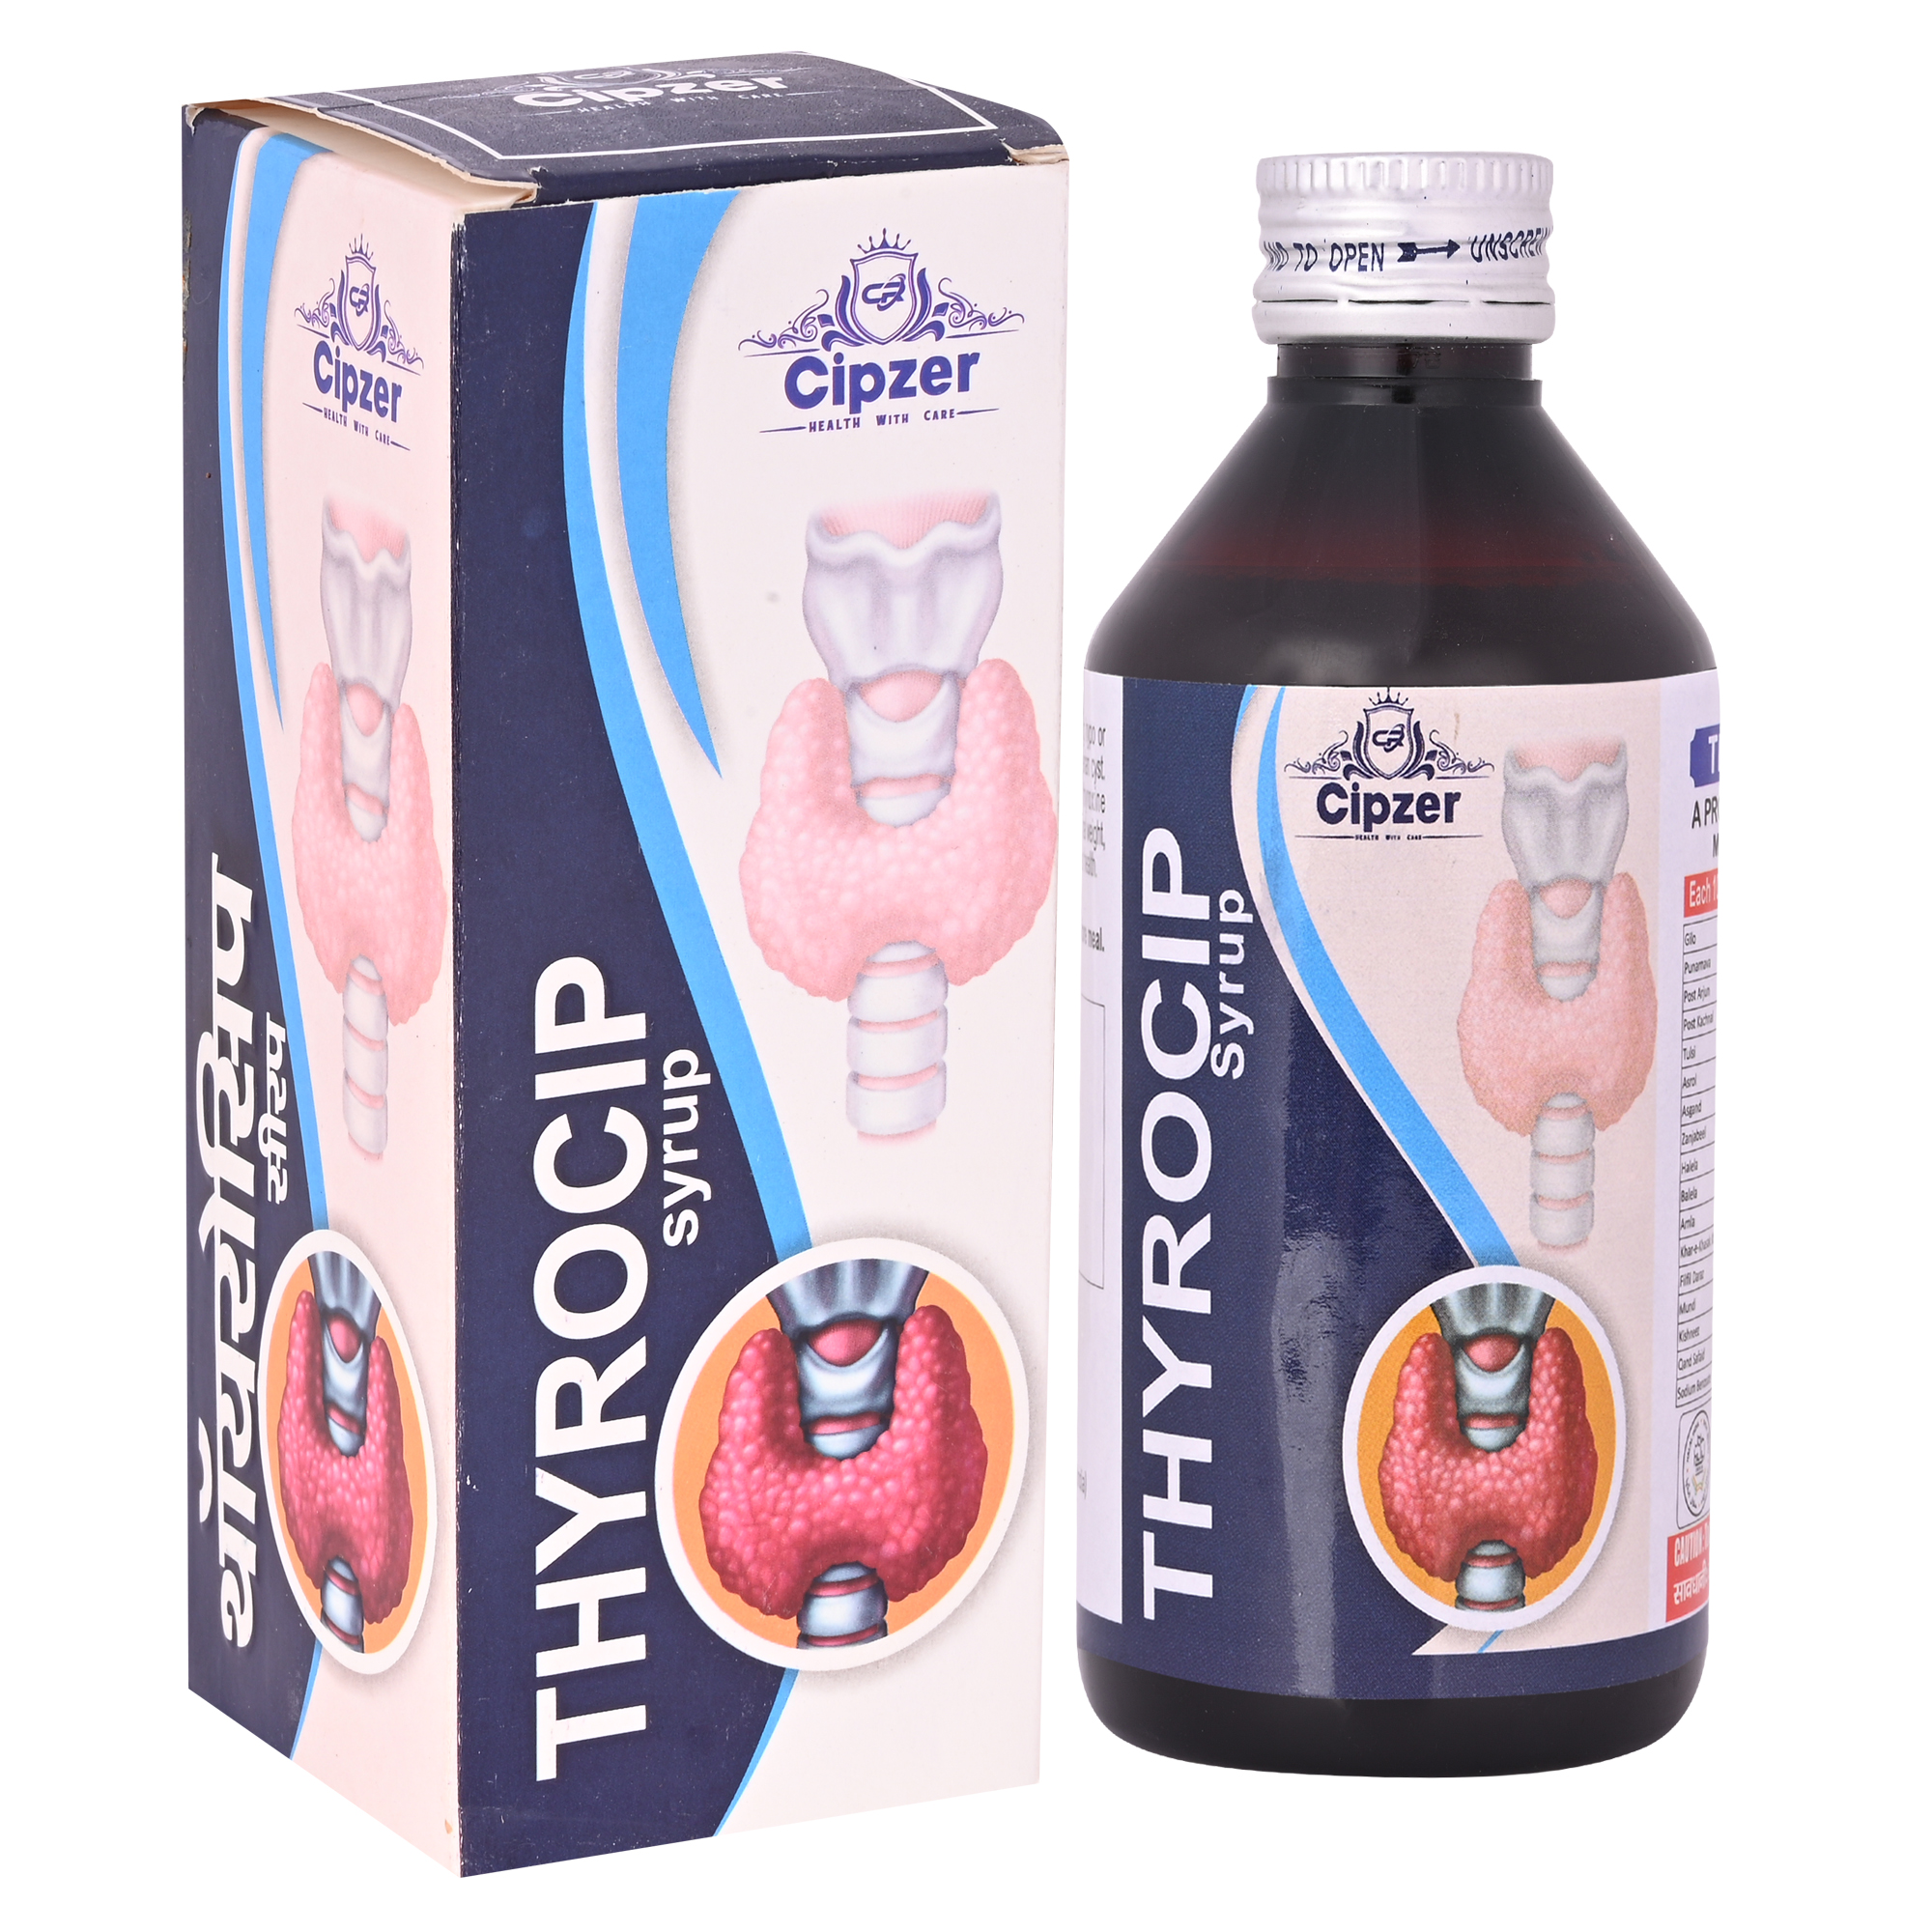 Buy Cipzer Thyrocip Syrup at Best Price Online